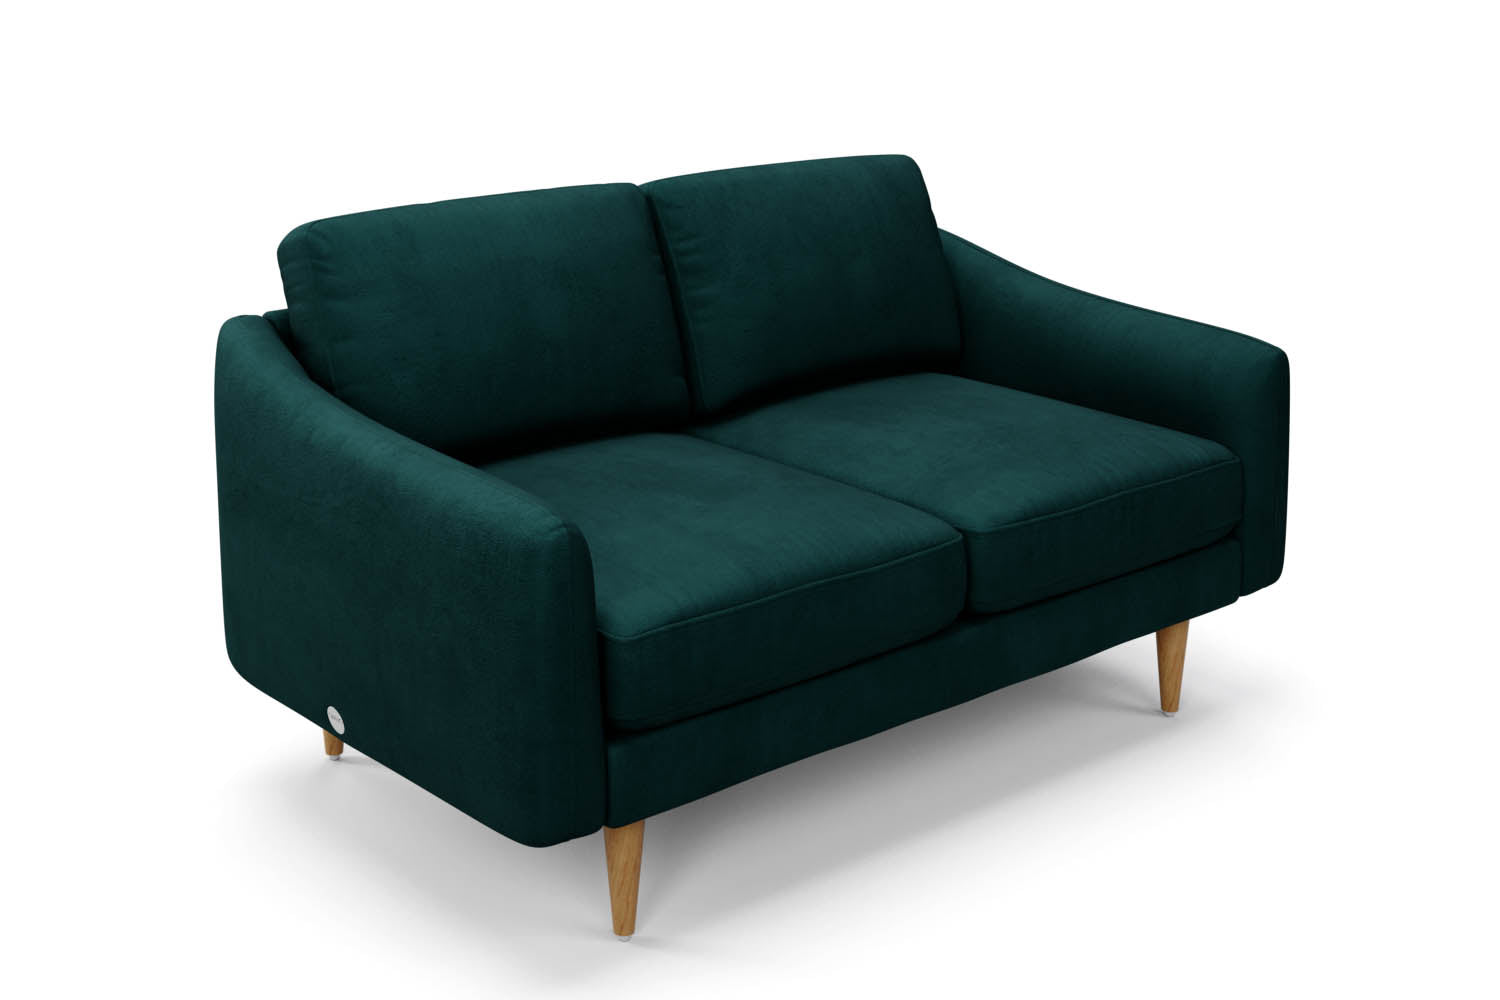 SNUG | The Rebel 2 Seater Sofa in Pine Green 